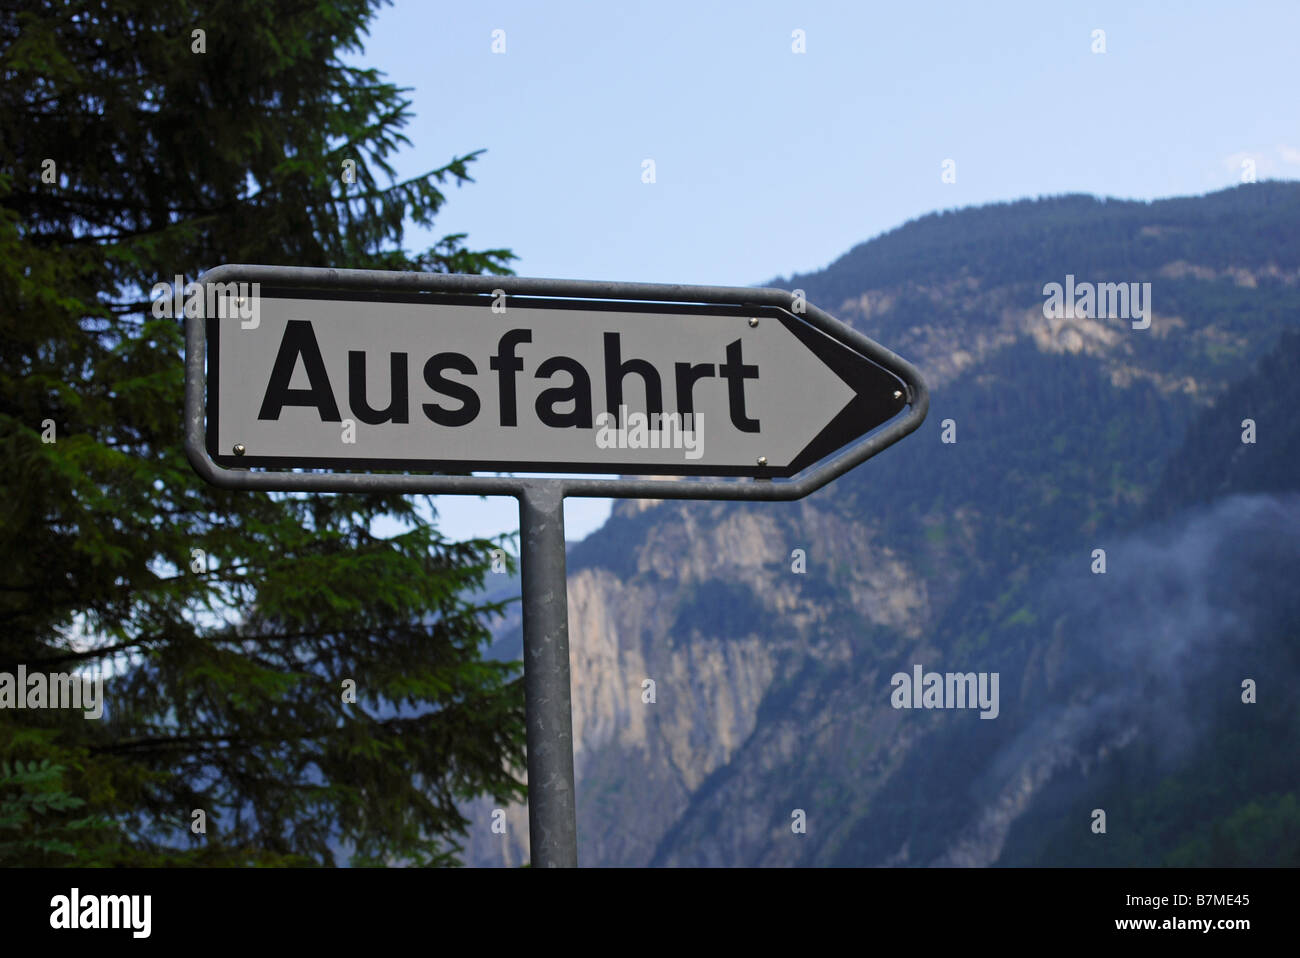 Ausfahrt sign exit sign in german language Lauterbrunnen